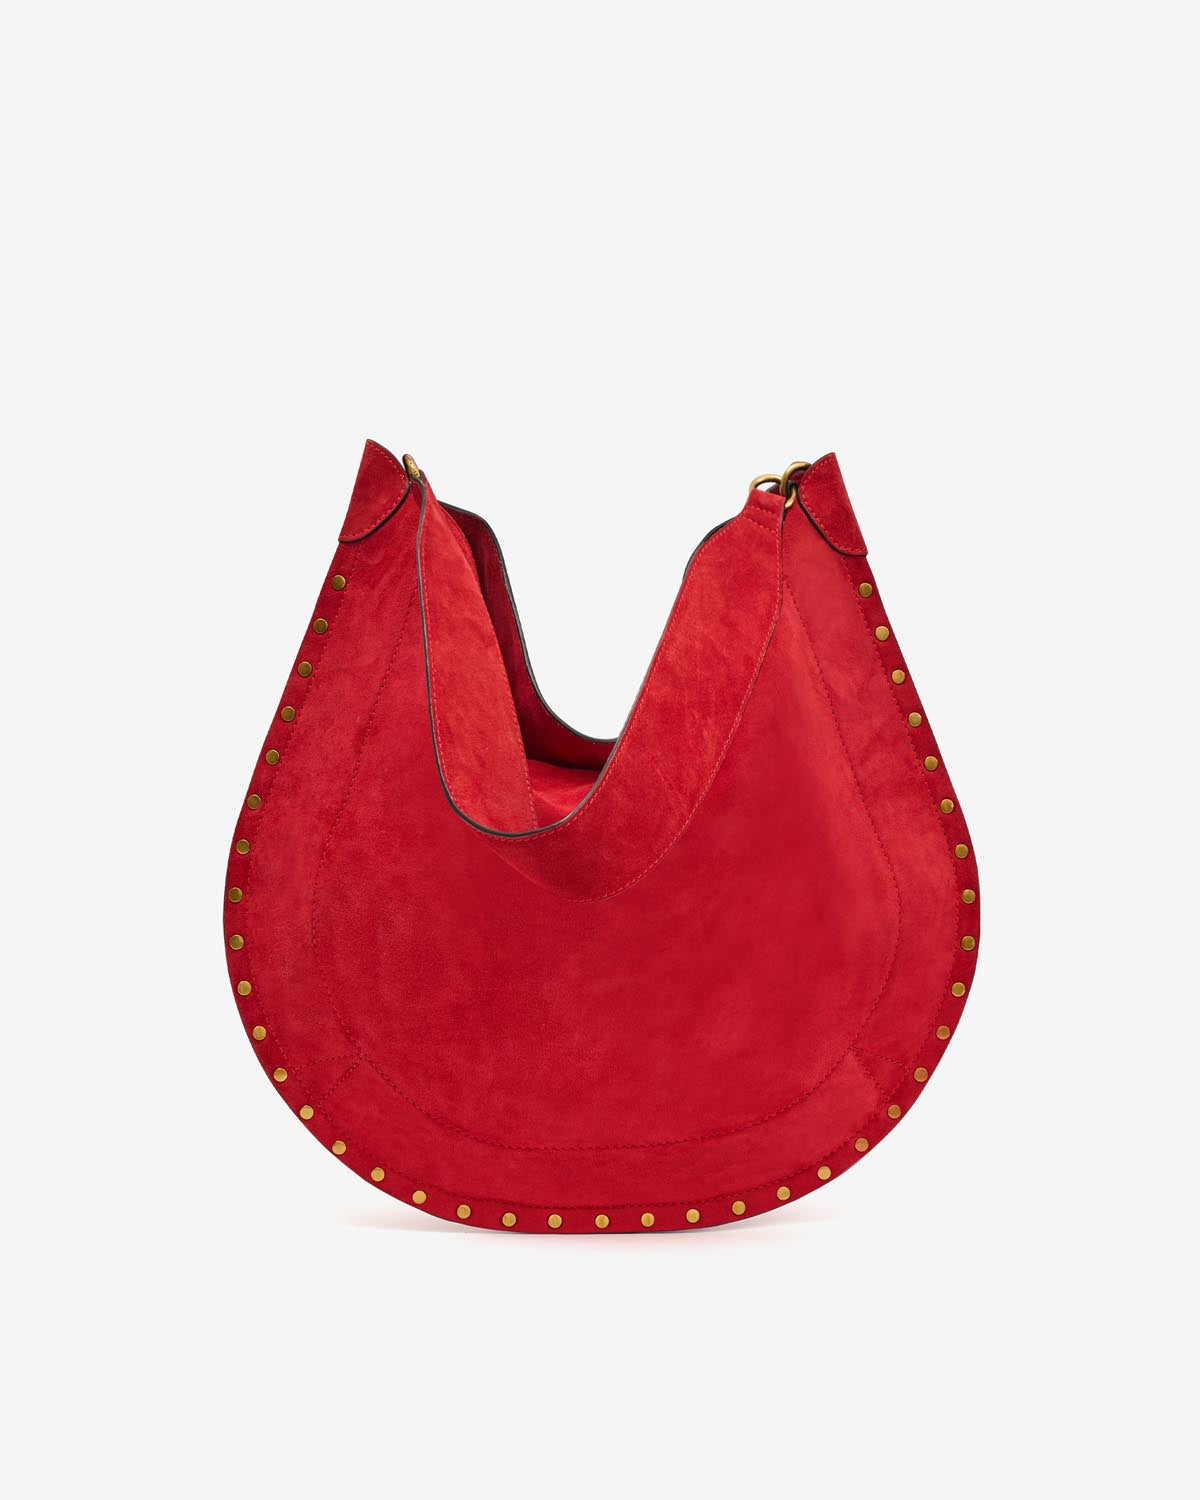 Oskan hobo soft borsa Woman Scarlet red 2